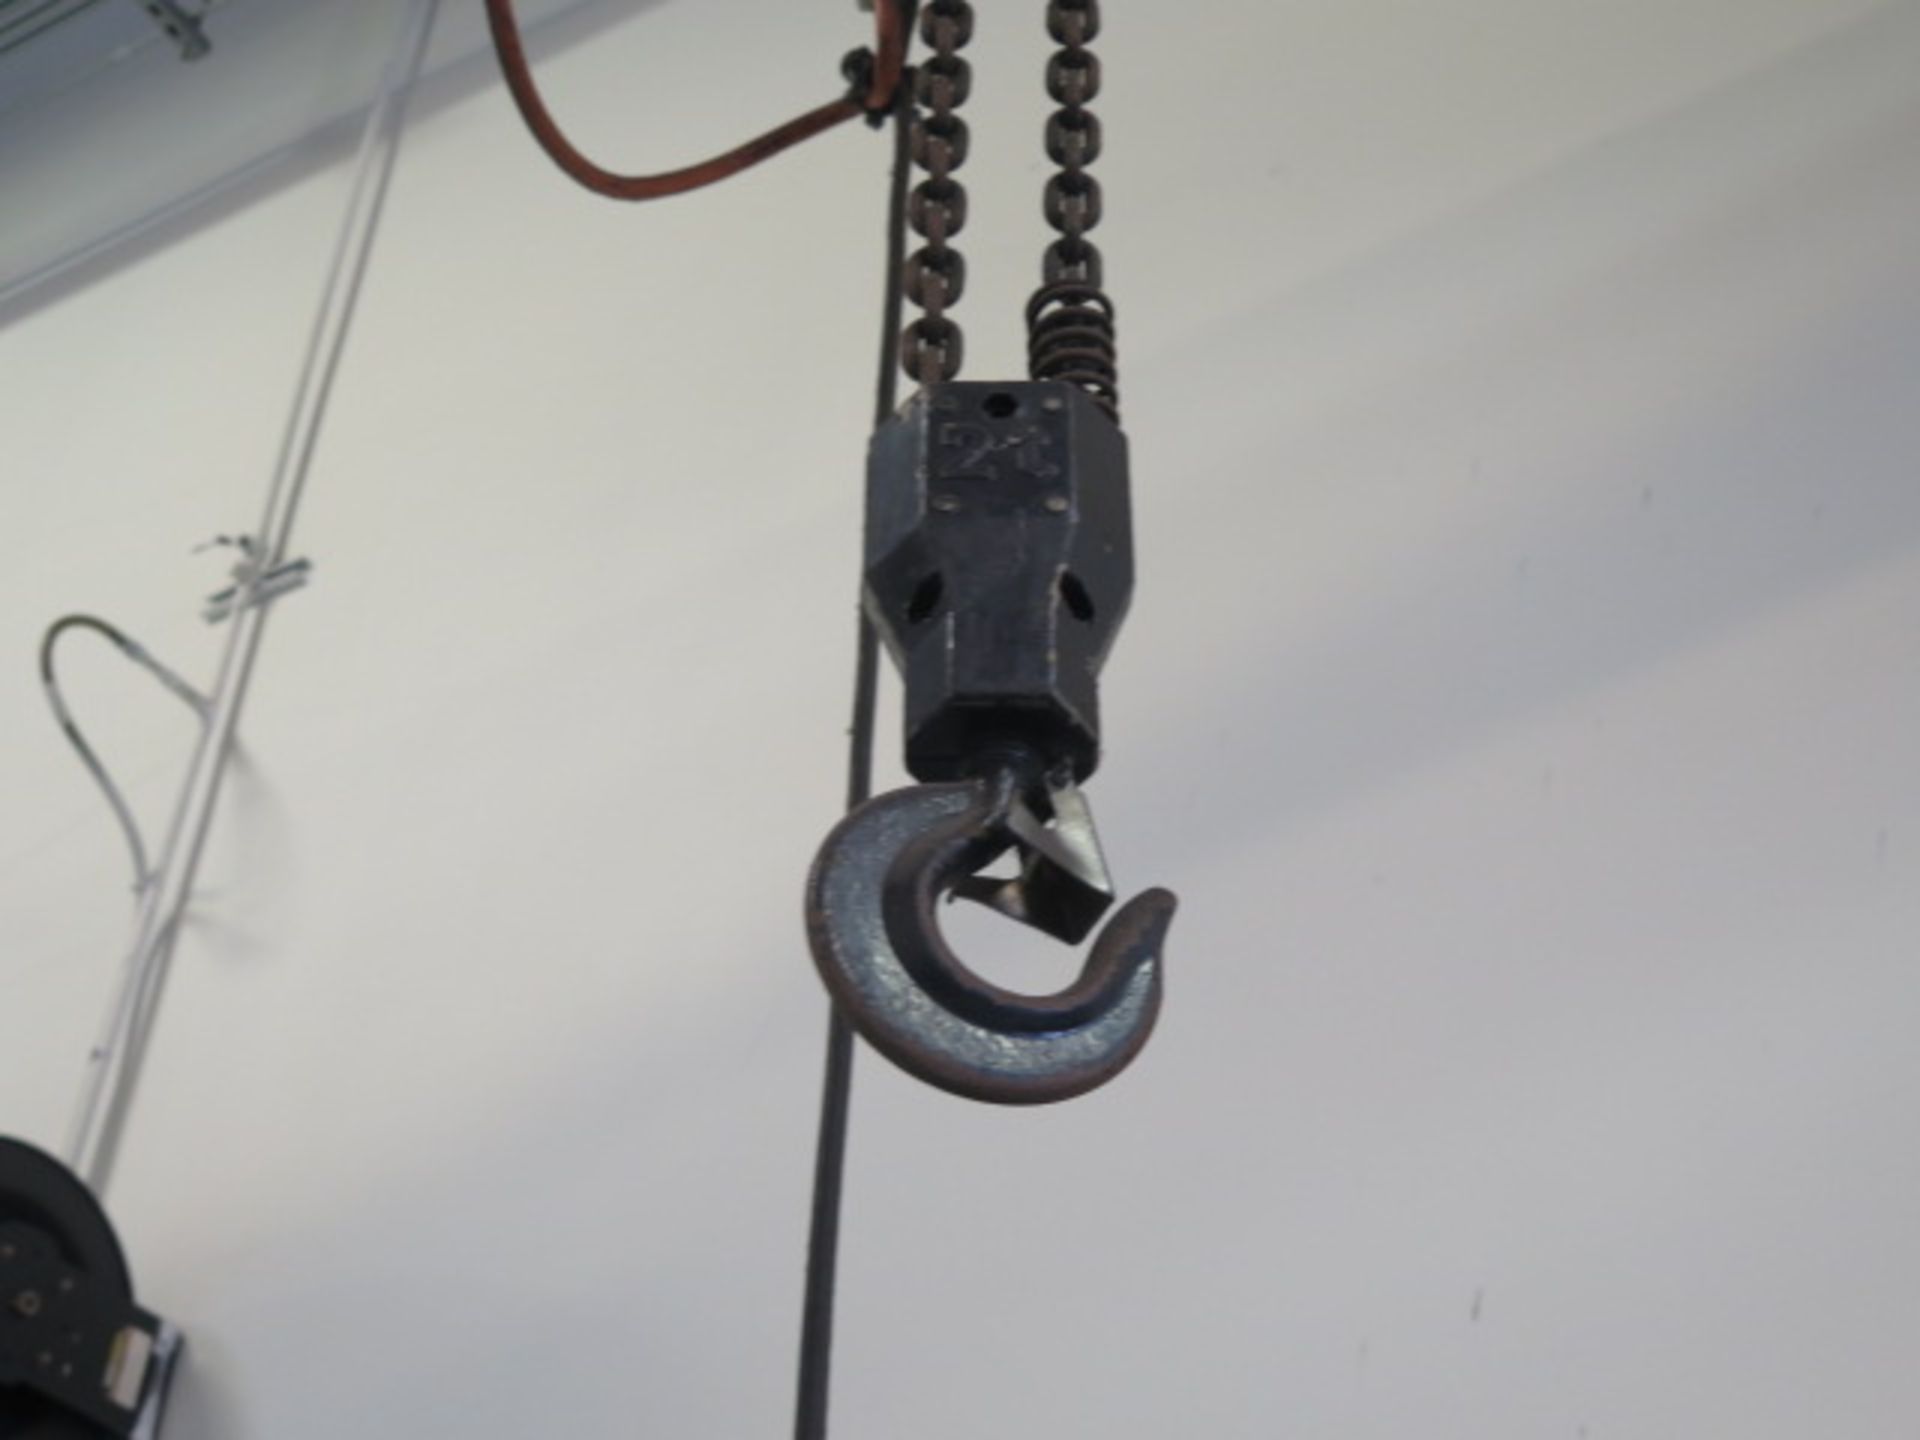 Contrx Crane 2-Ton Cap Floor Mounted Jib Crane w/ Jet 2-Ton Electric Hoist - Image 5 of 6